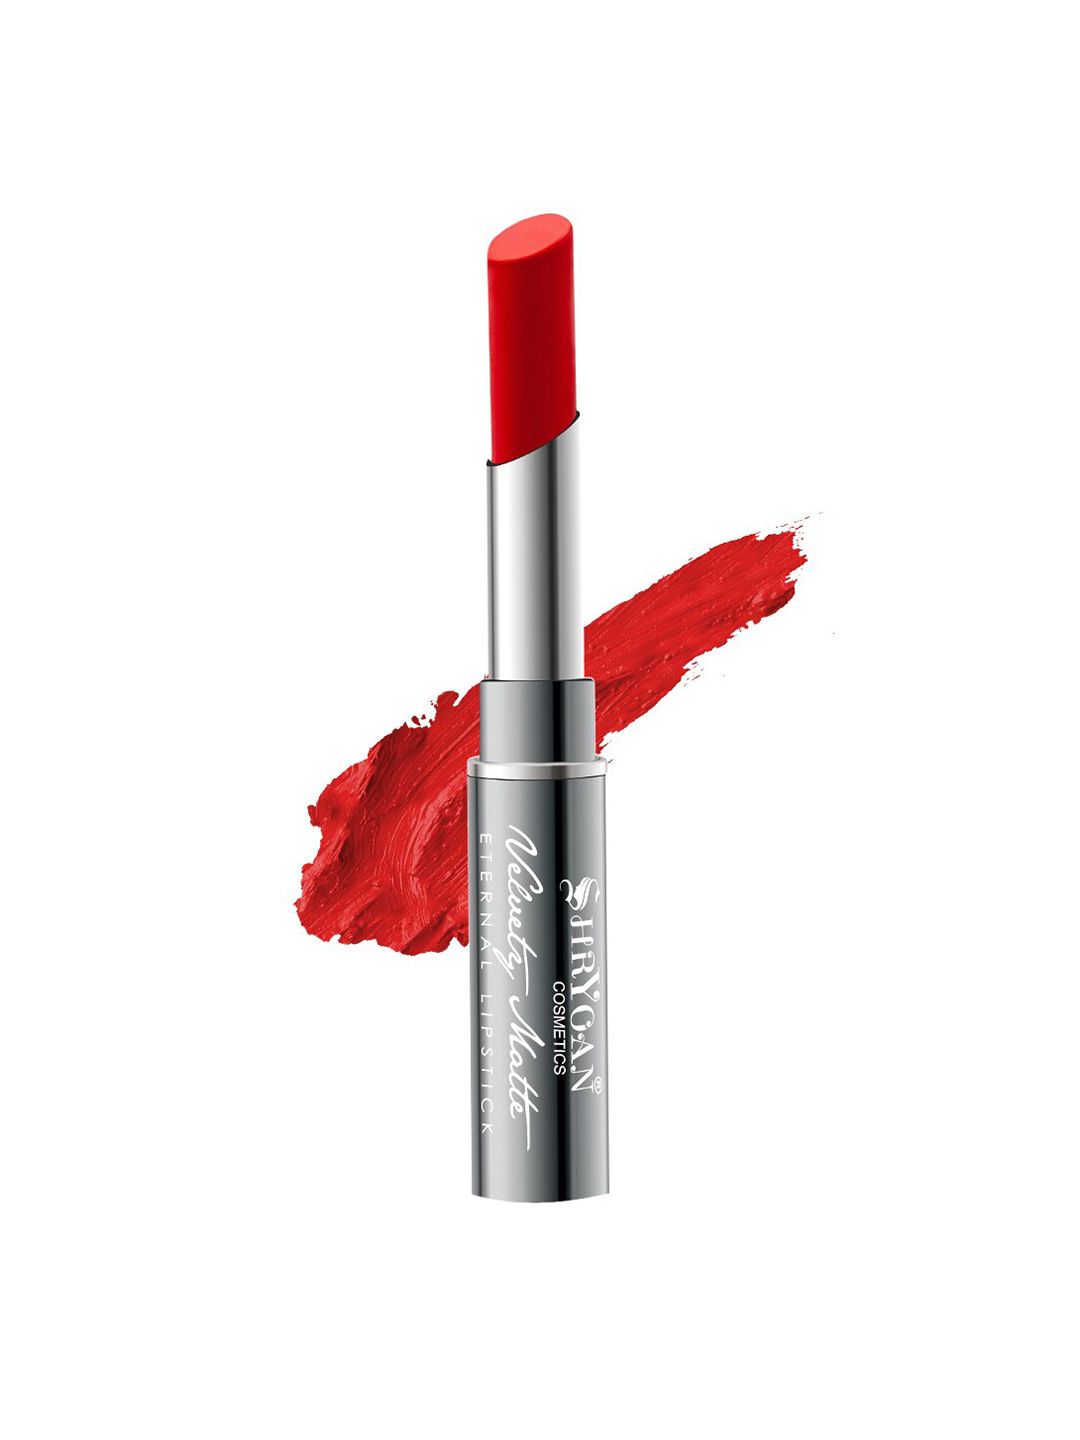 SHRYOAN Velvety Matte Non-Transfer Eternal Lipstick - Code Red 05 Price in India